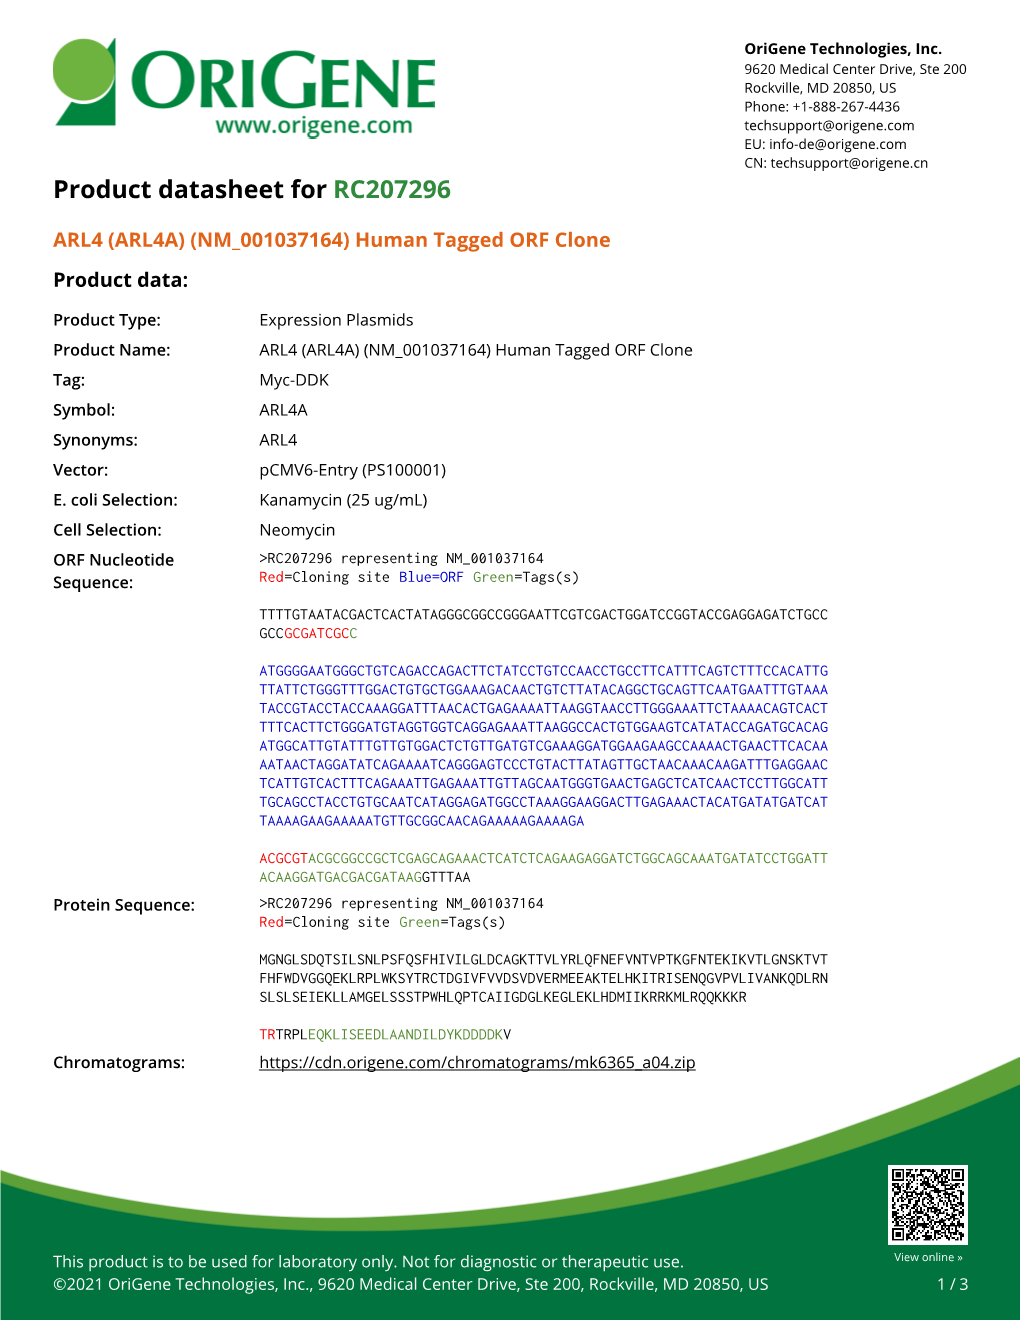 ARL4 (ARL4A) (NM 001037164) Human Tagged ORF Clone – RC207296 | Origene